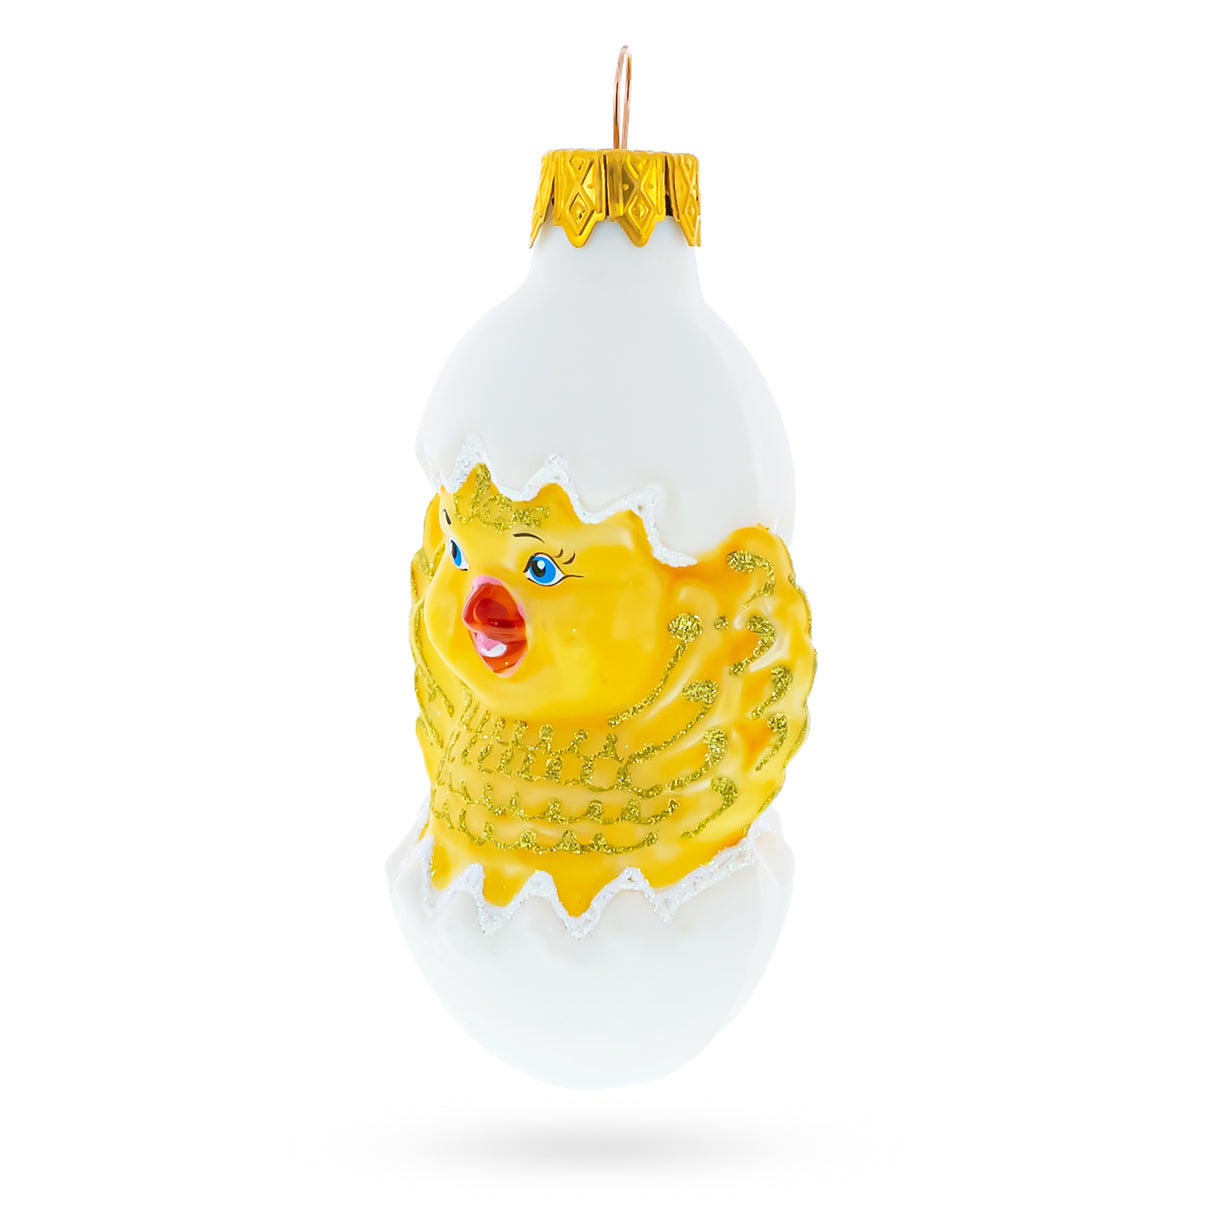 Buy Christmas Ornaments Animals Farm Animals Chicken by BestPysanky Online Gift Ship